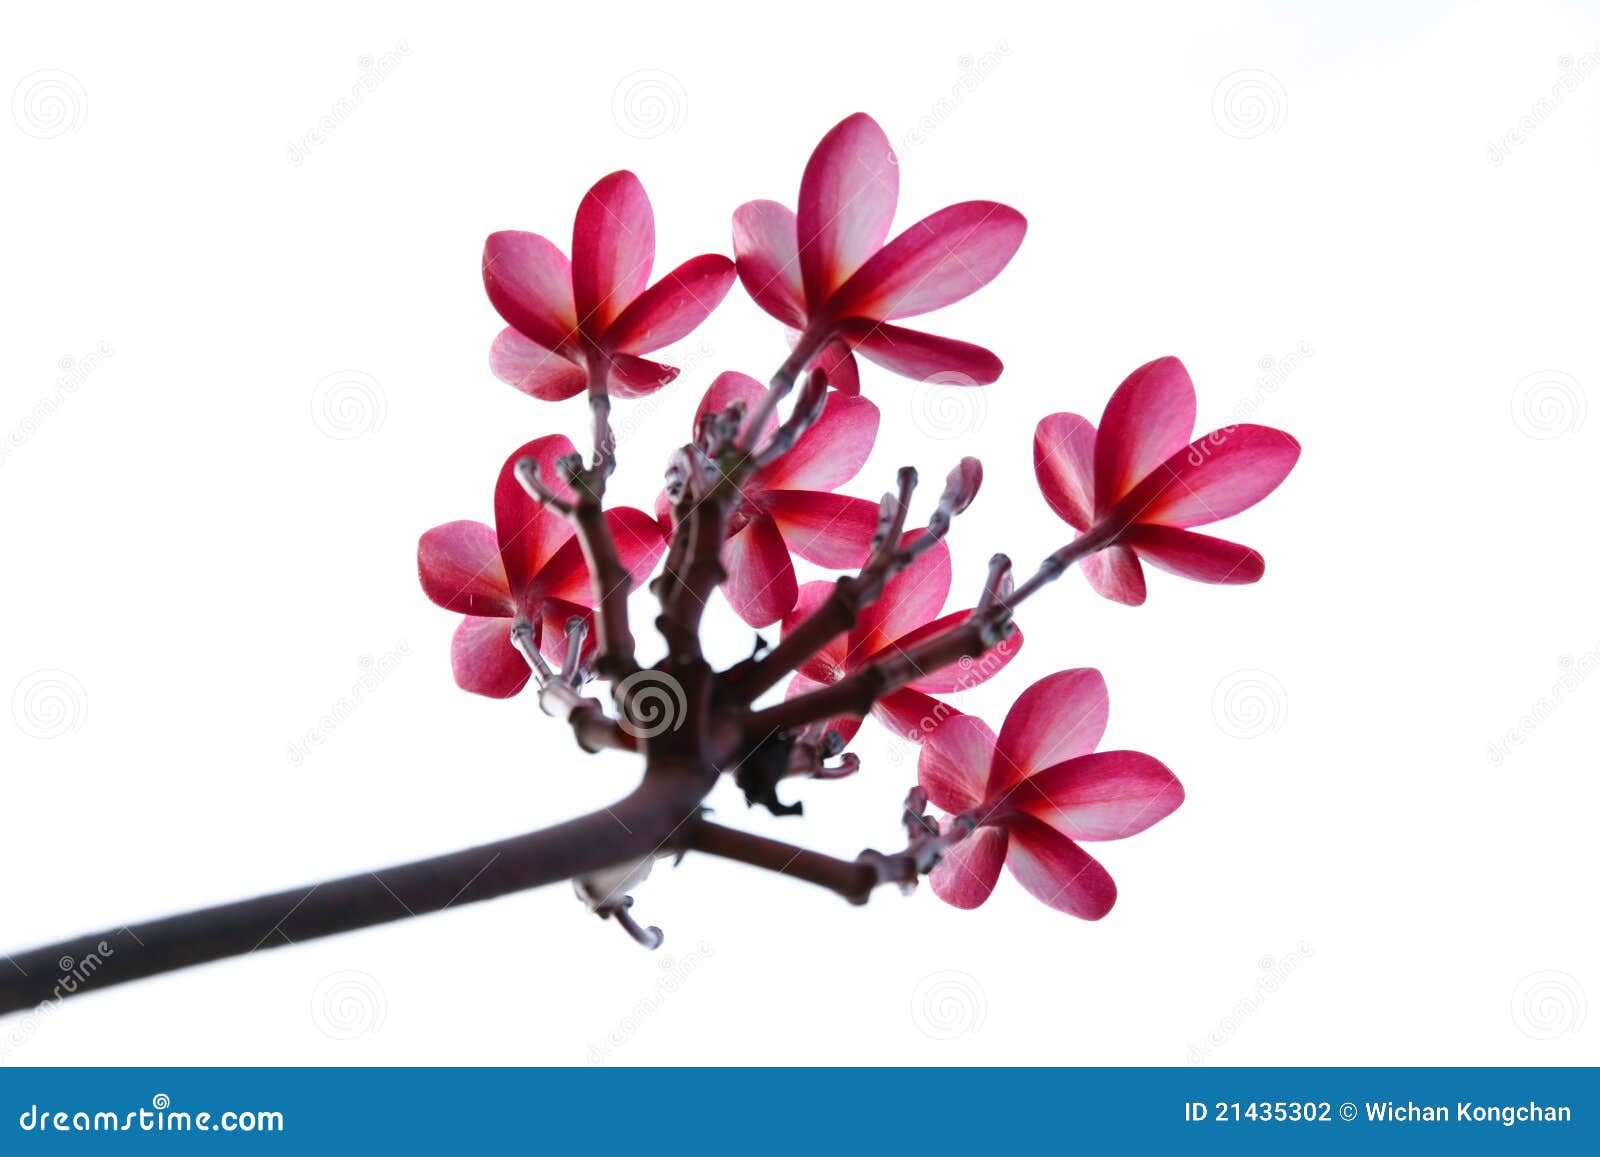 Plumeria flower stock photo. Image of park, plant, tropics - 21435302